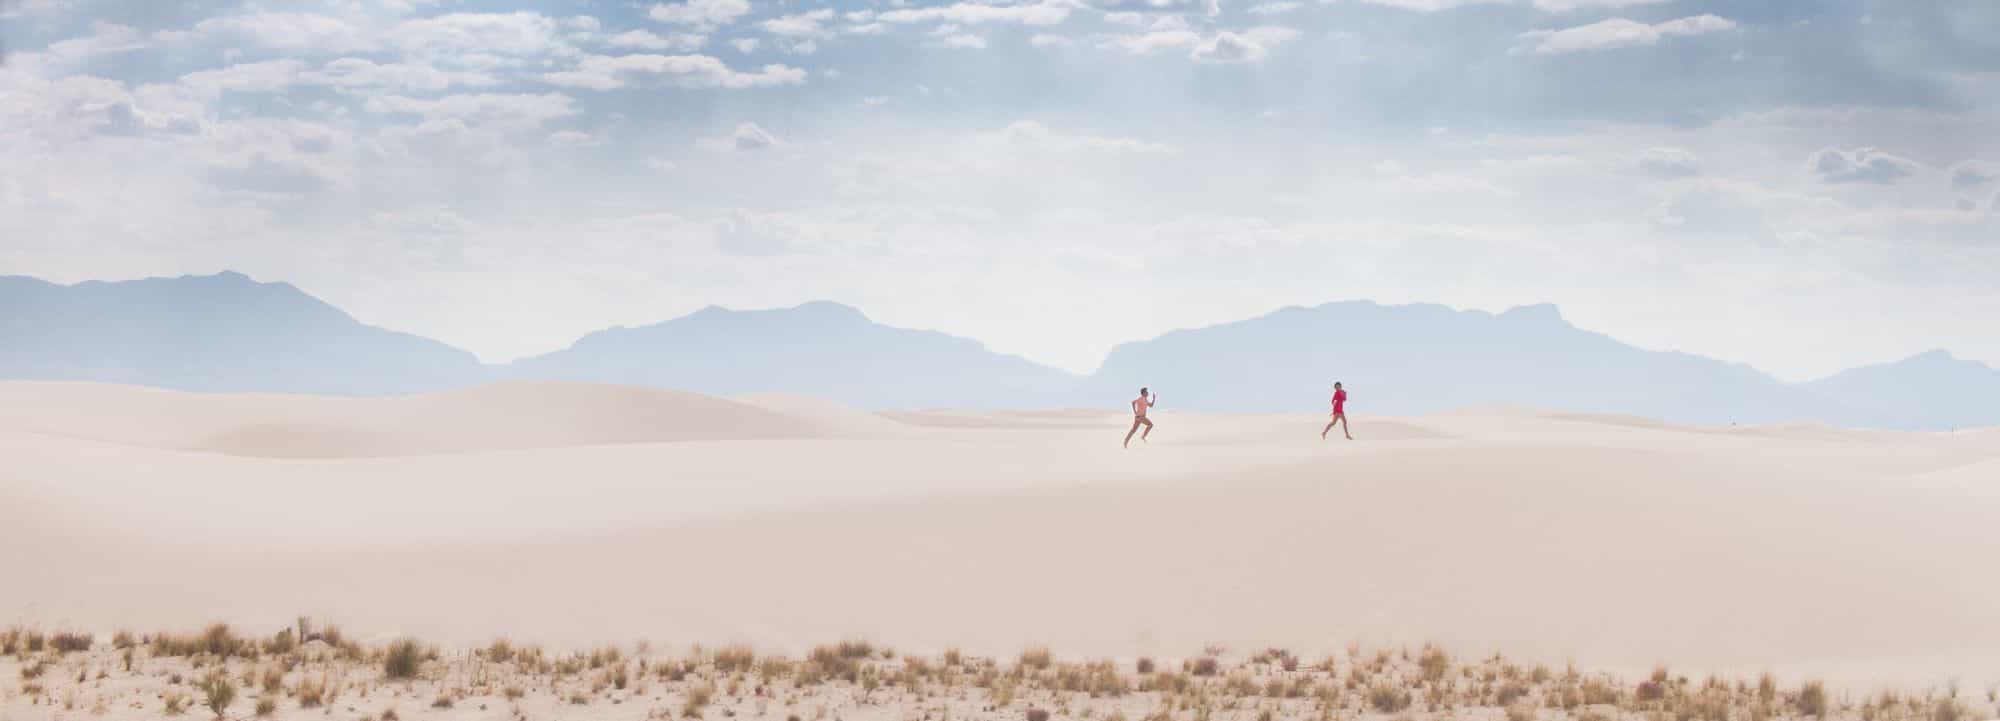 White Sands, New Mexico, USA